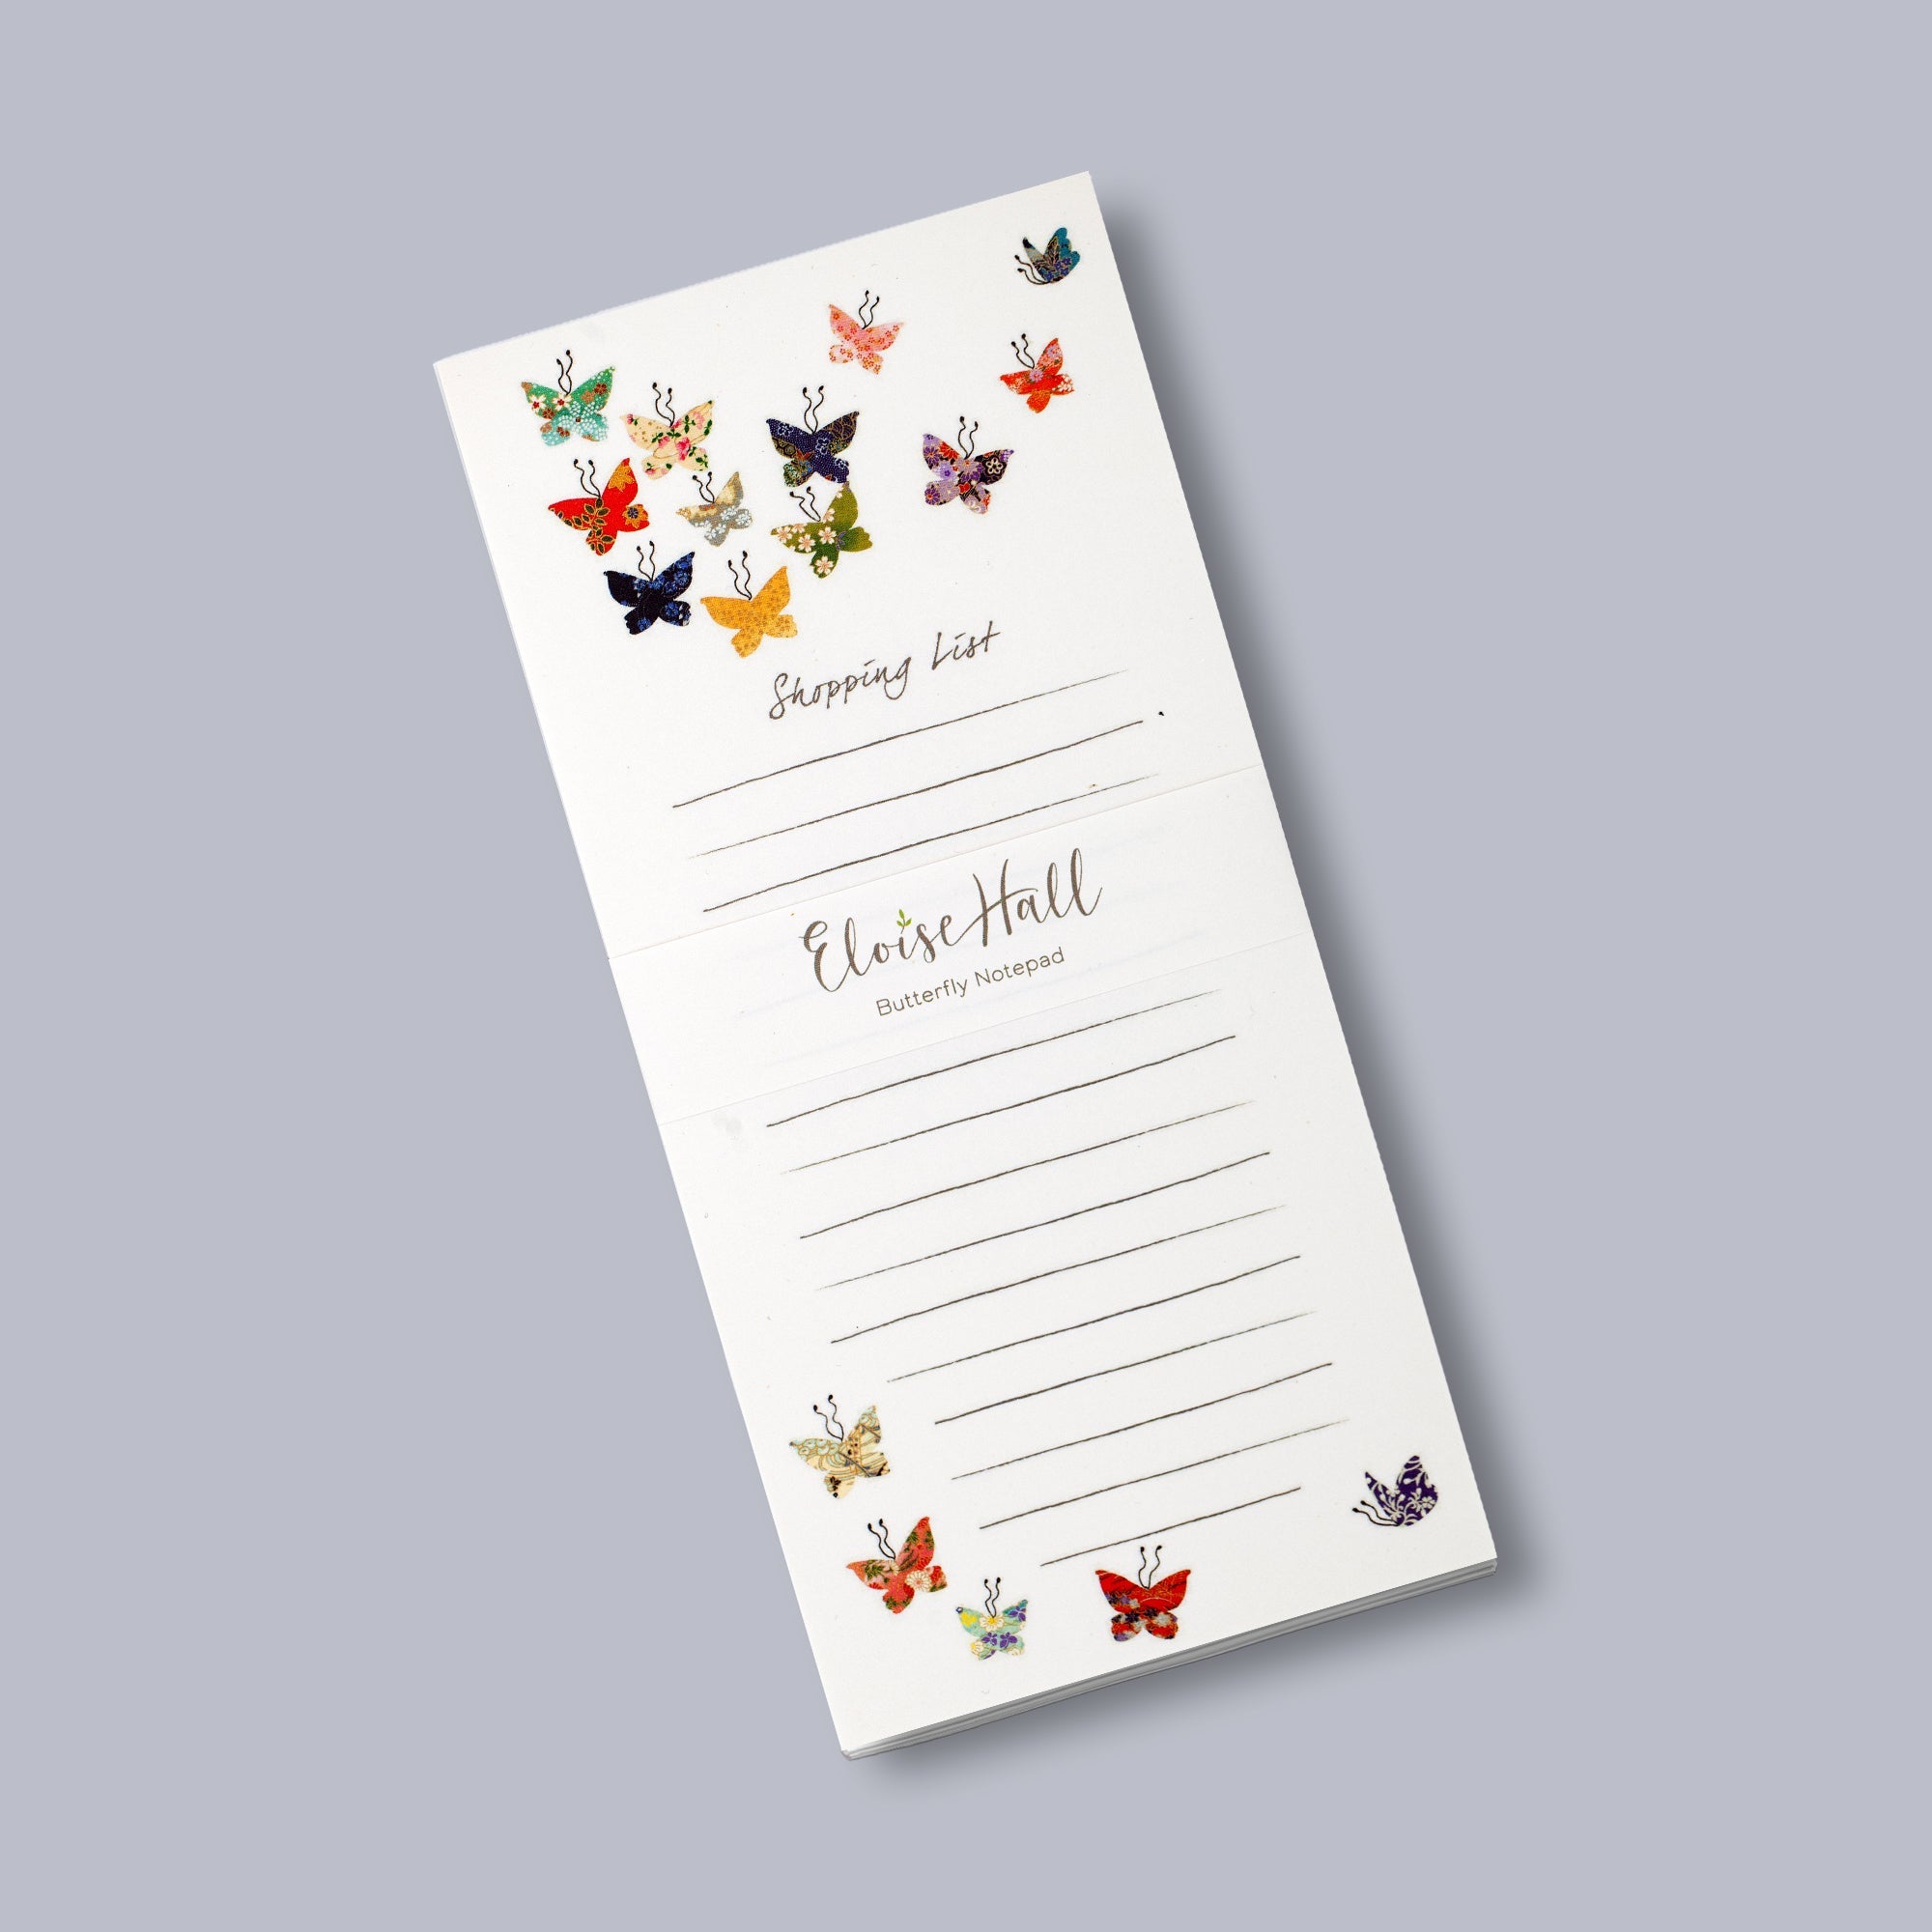 Notepad - 'Shopping list' avec des papillons